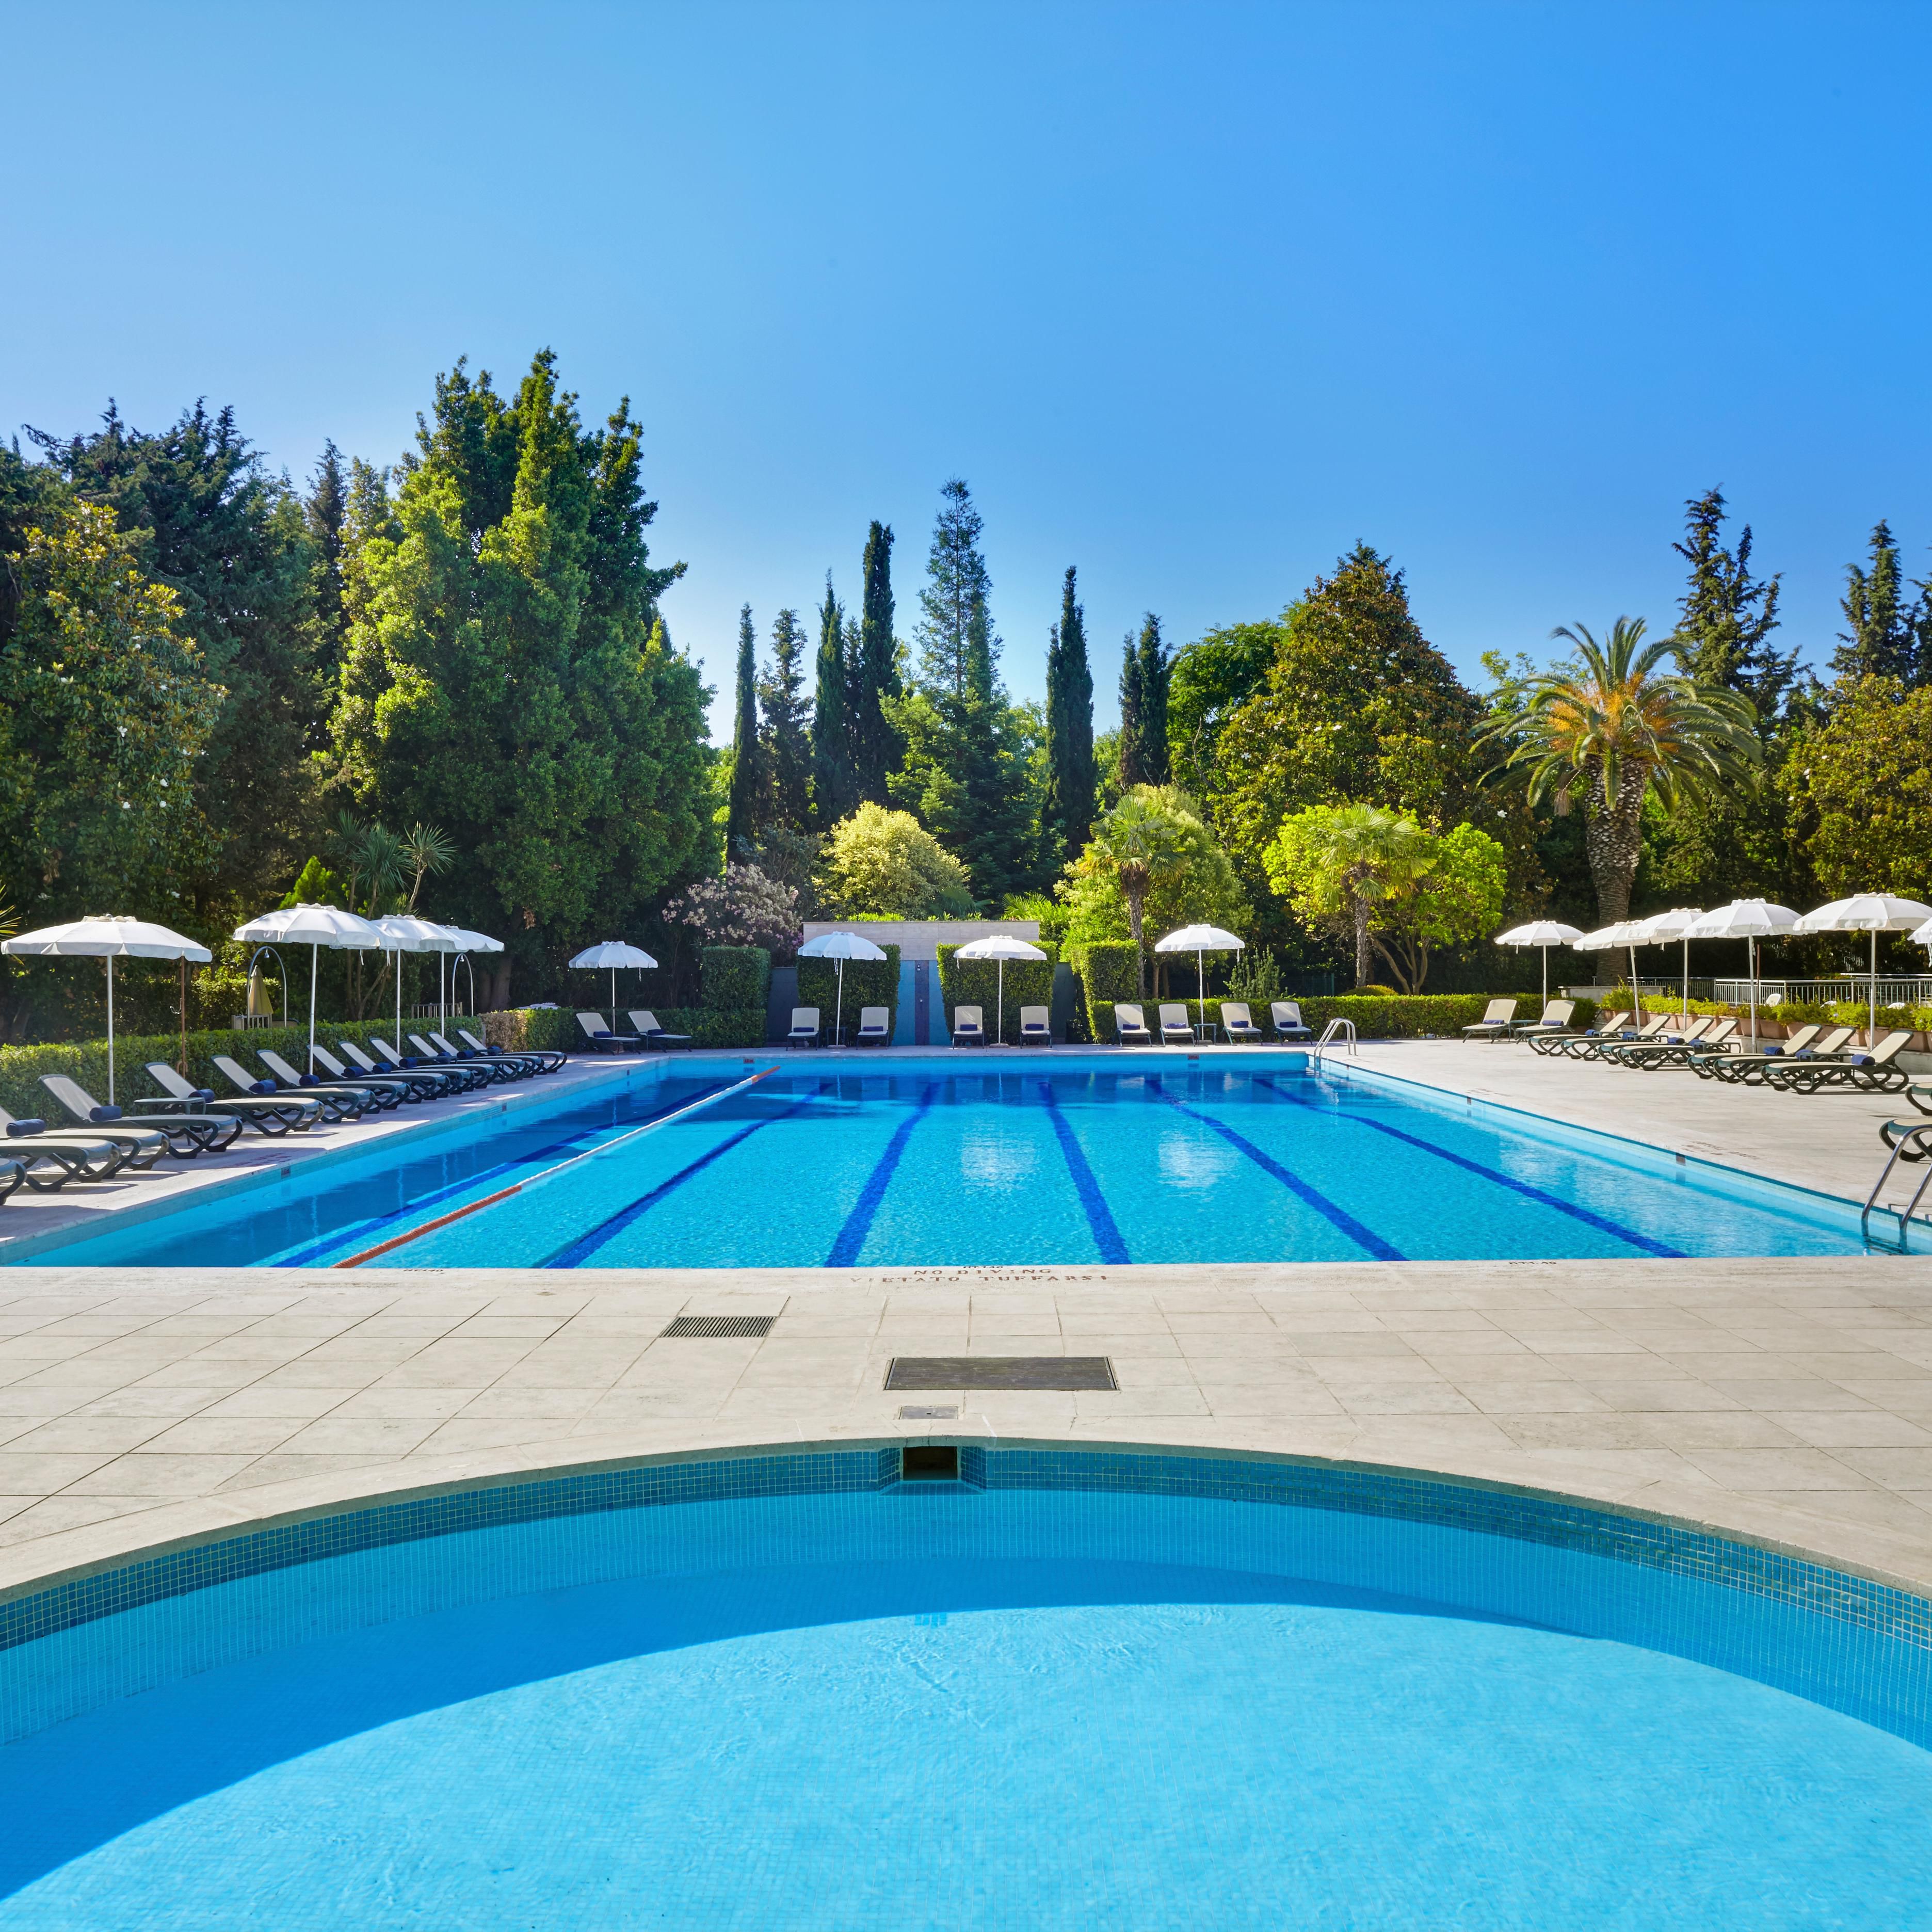 Take advantage of our seasonal swimming pool